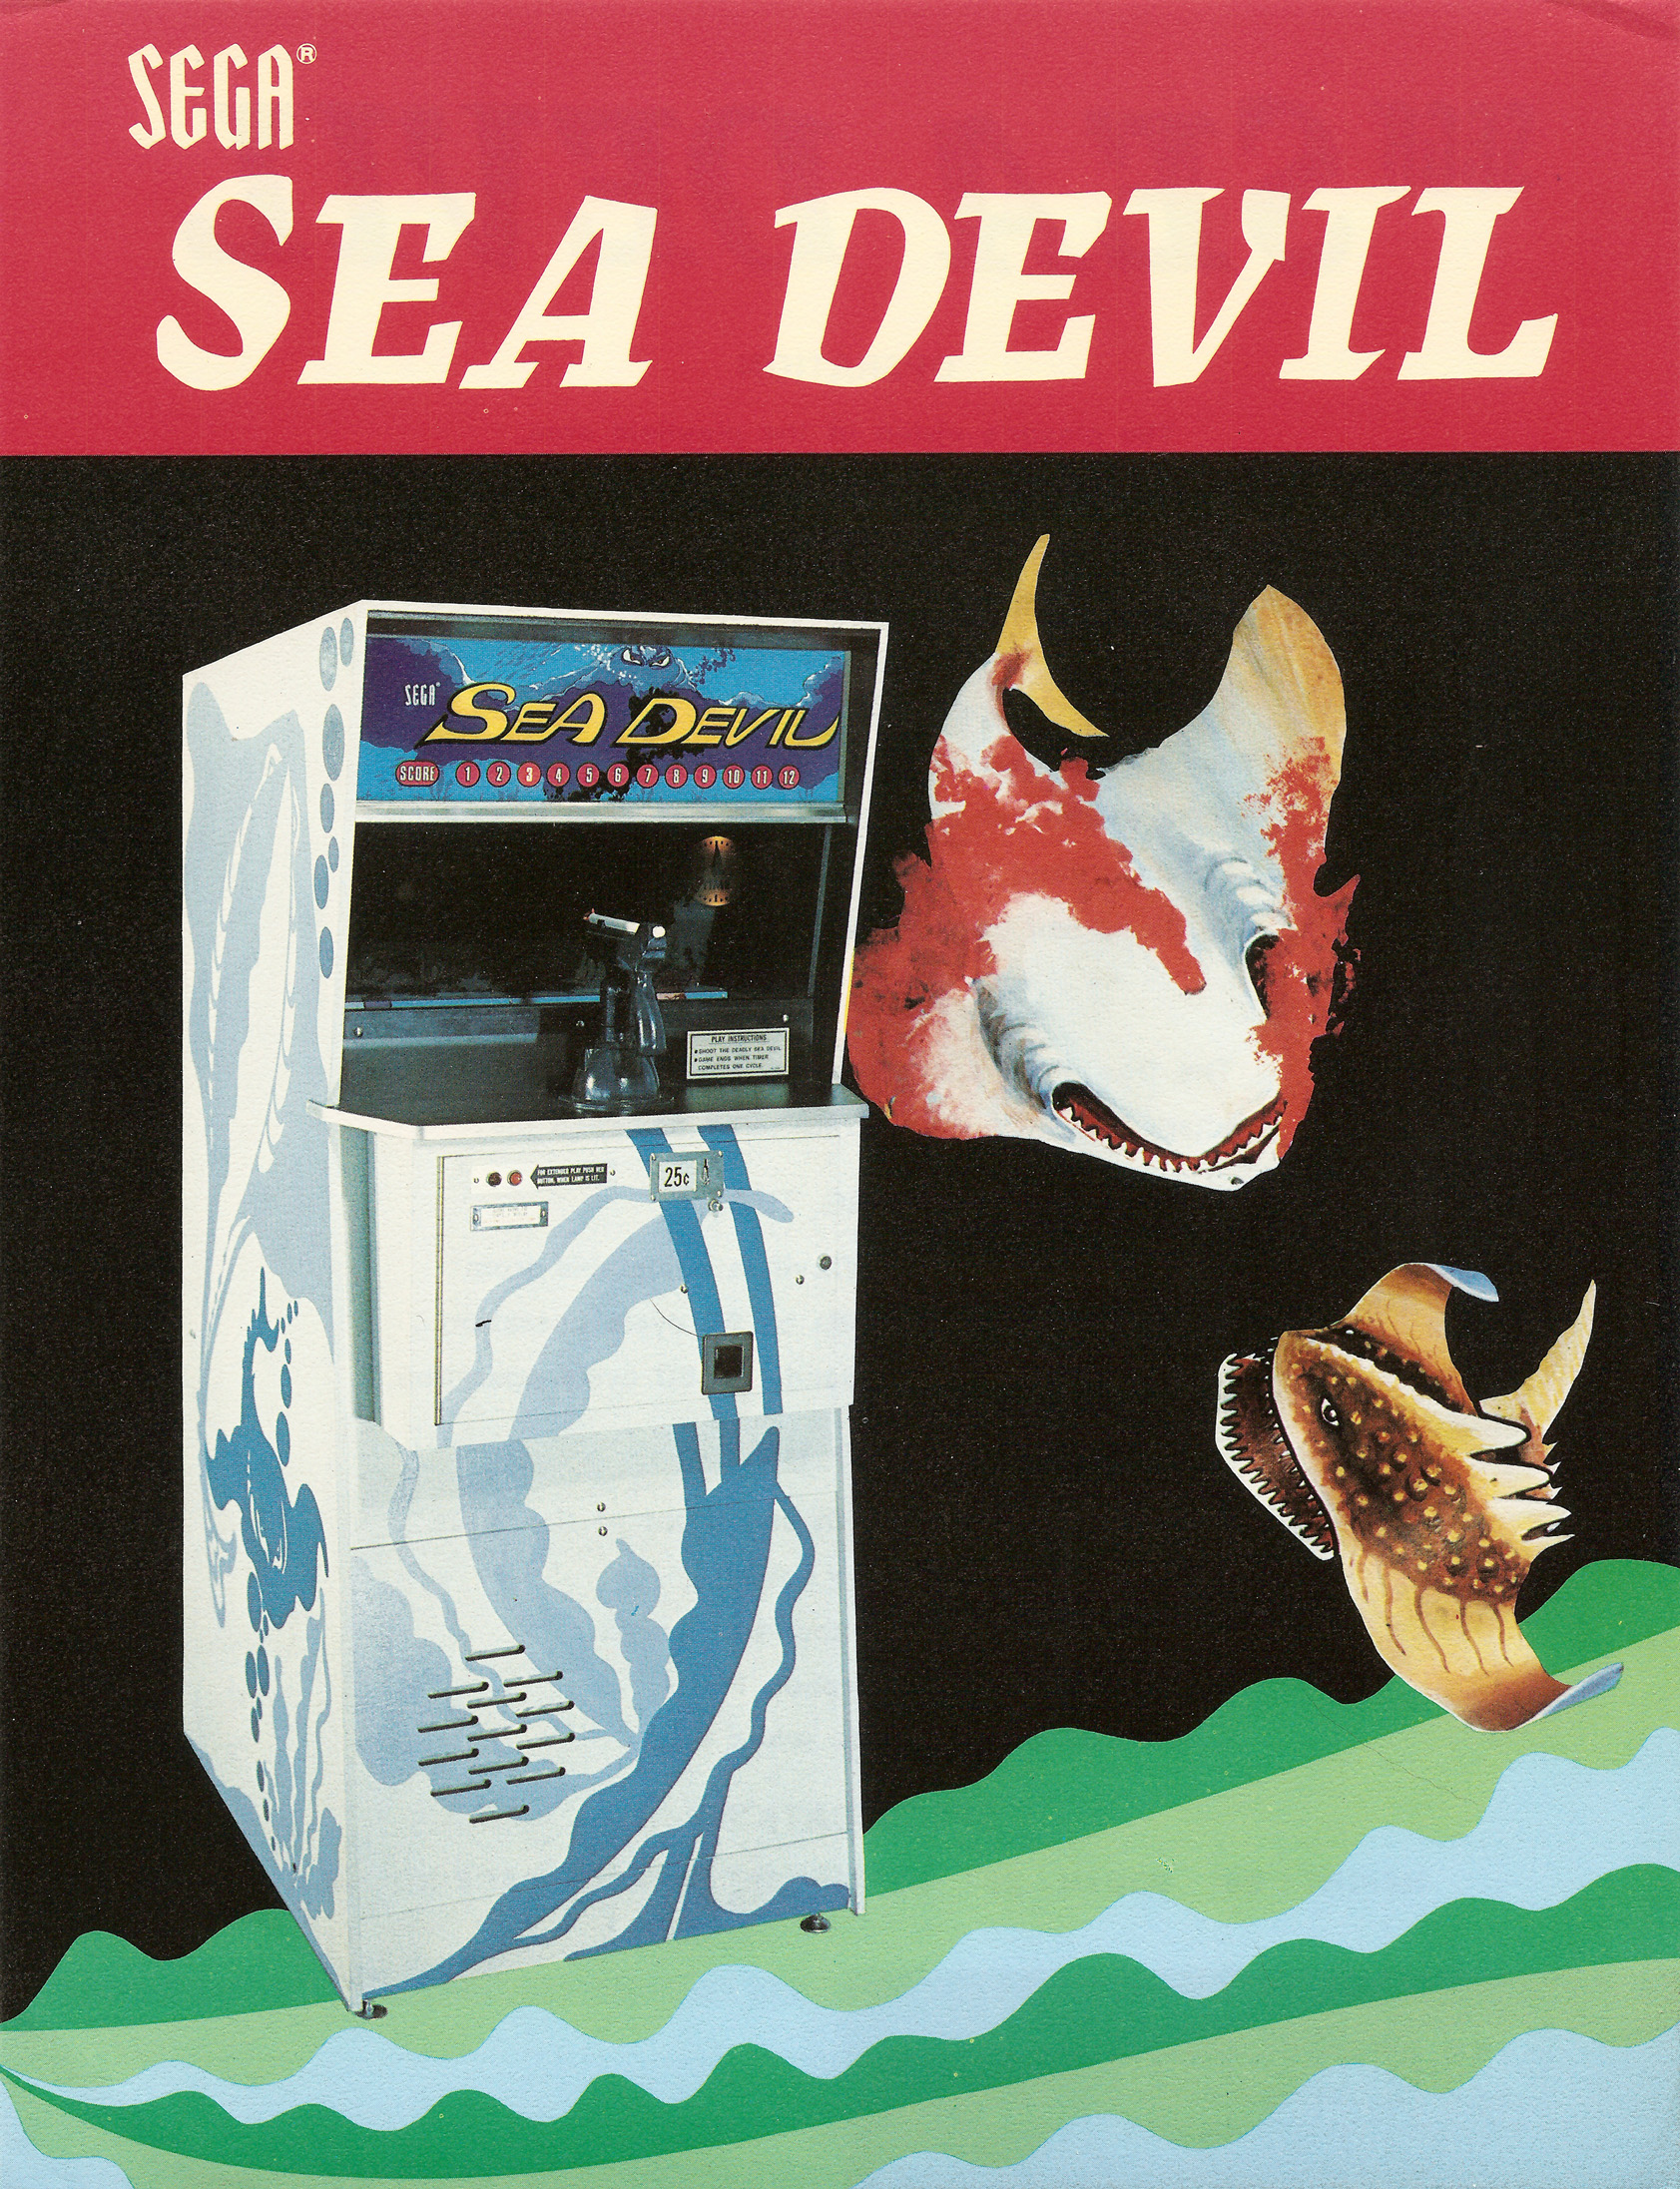 Seadevil flyer1.jpg